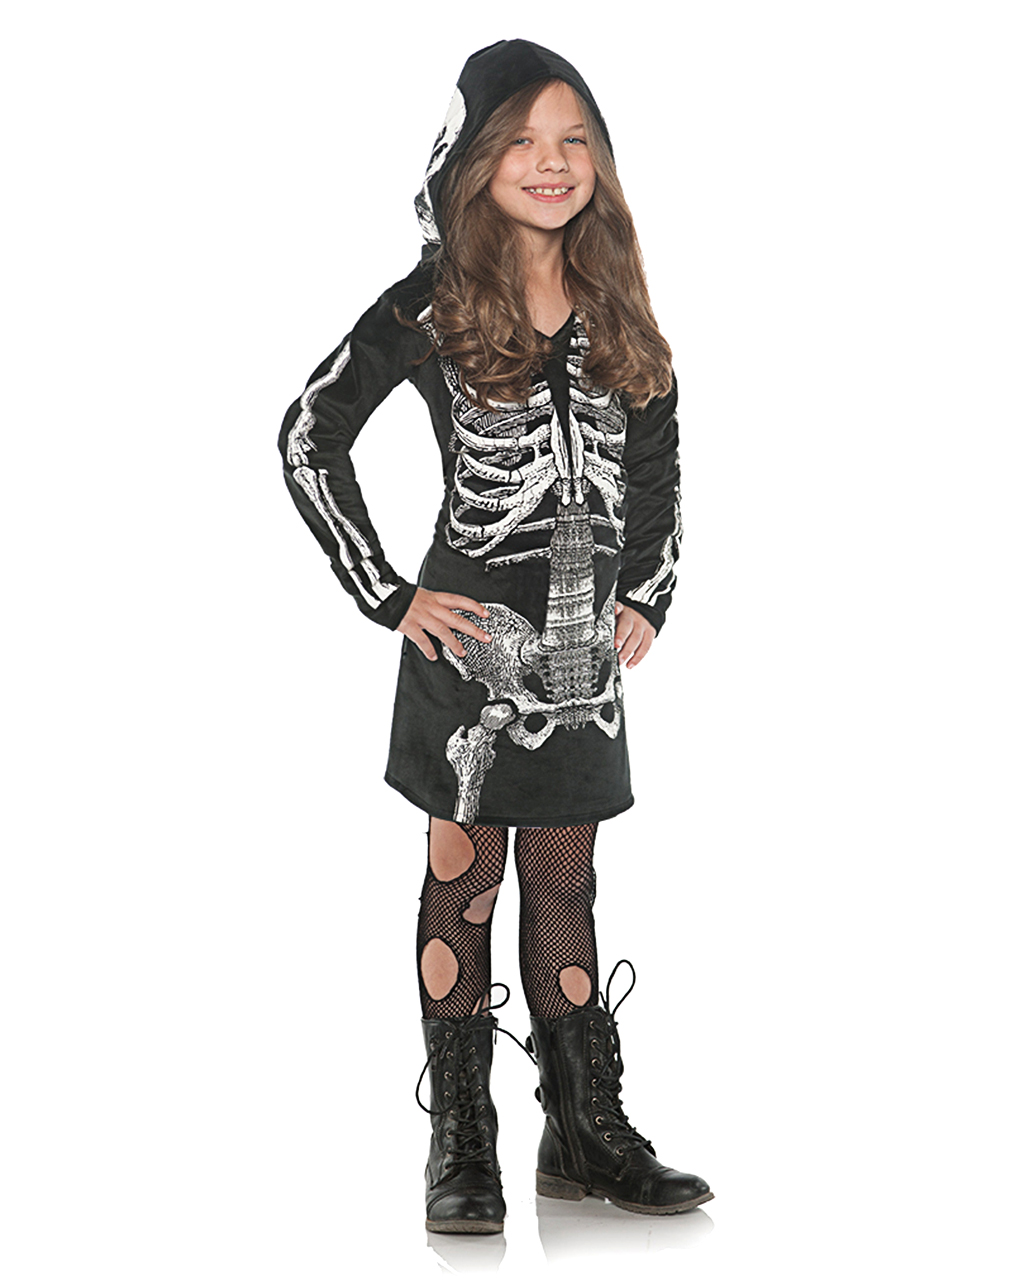 IKALI Mädchen Skelett Kostüm Halloween Kinder Farbe Knochen Kleid Schädel Neon Funky Outfit 2PCS 